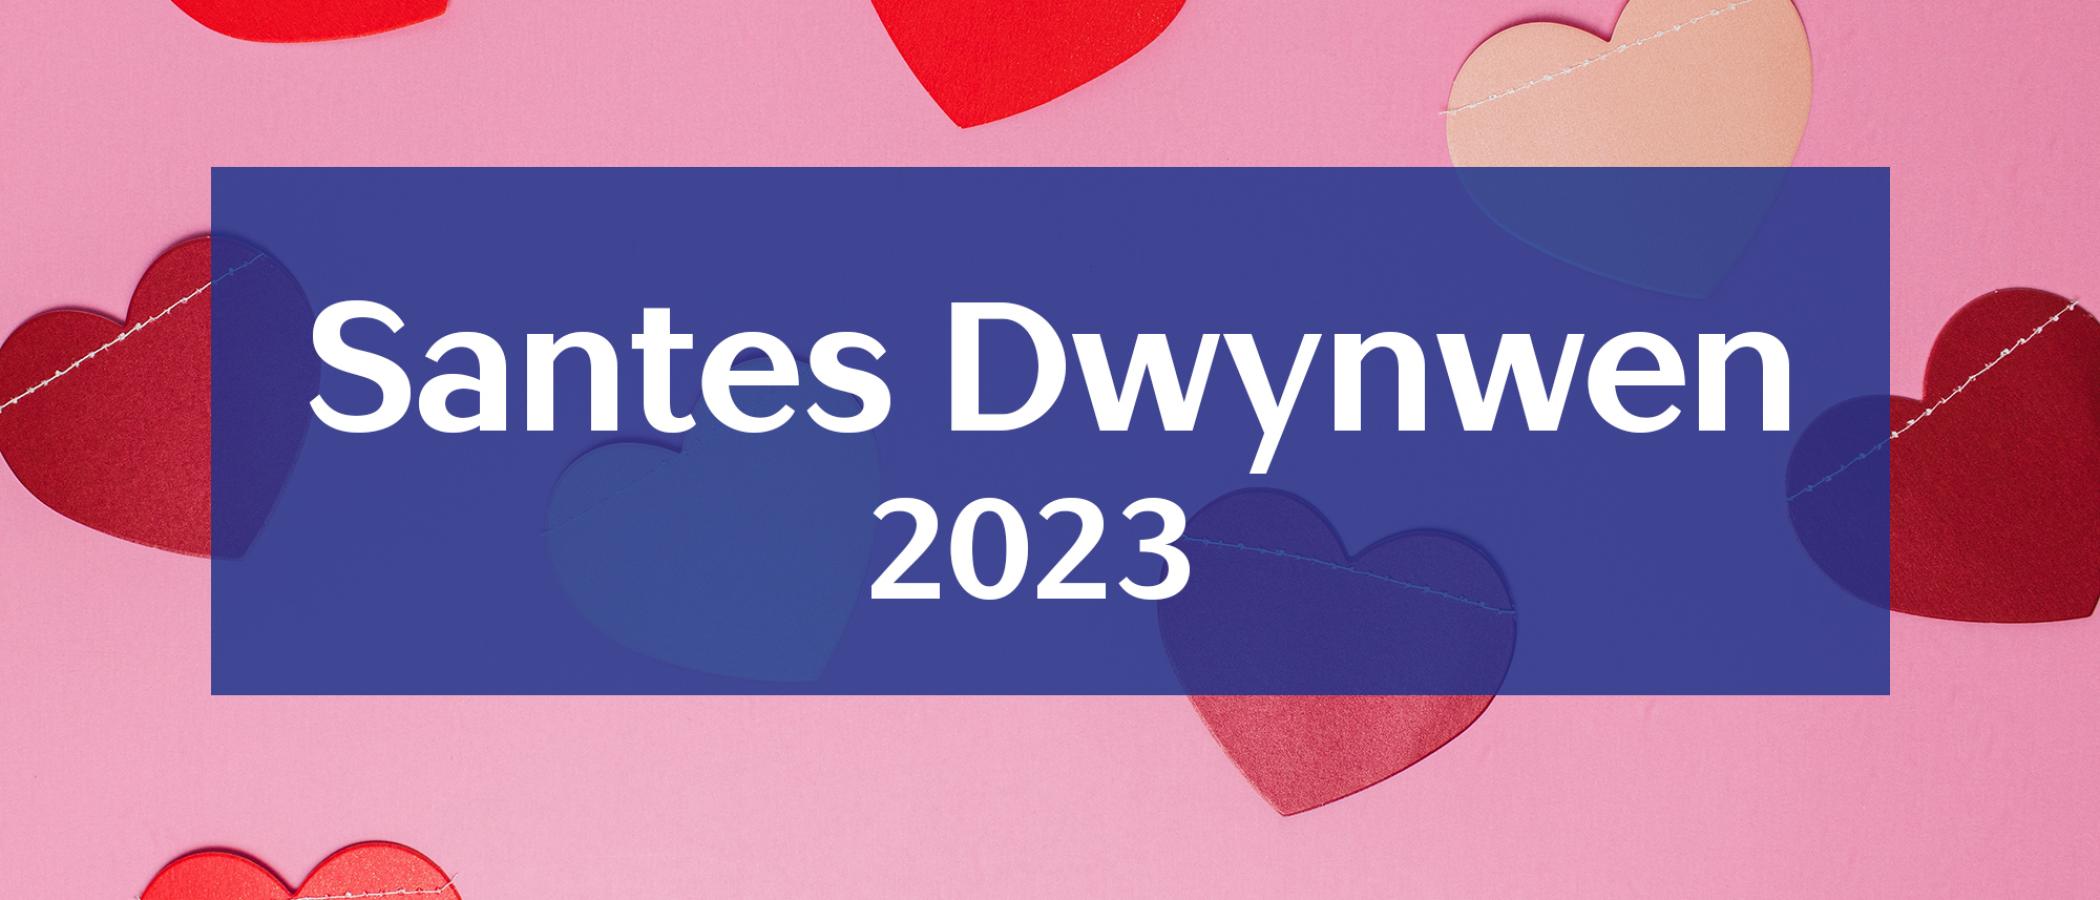 Santes Dwynwen 2023